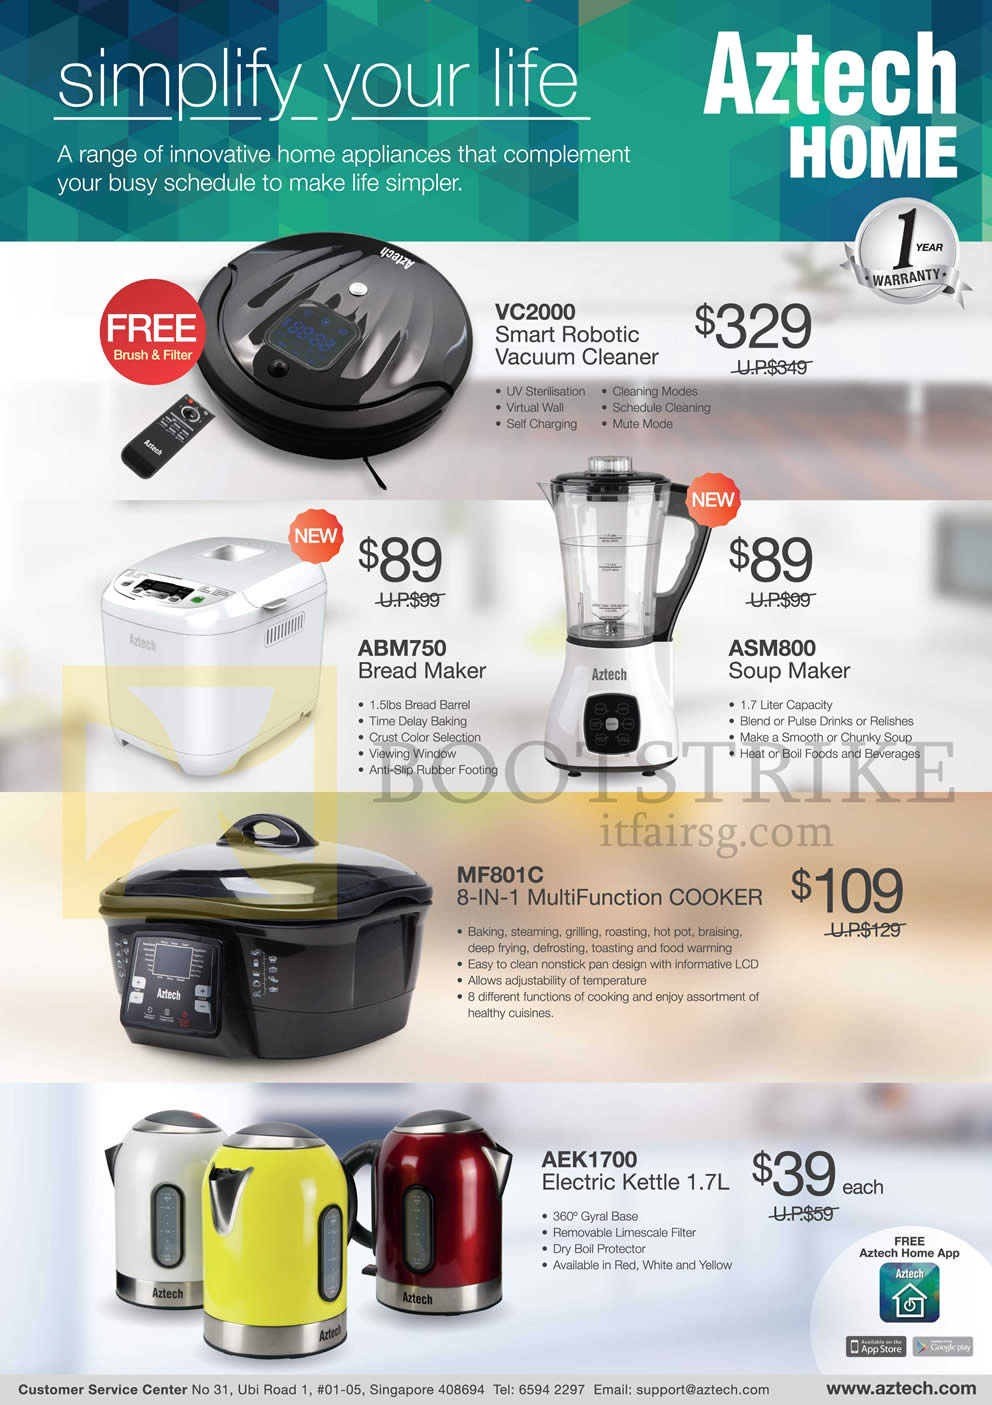 PC SHOW 2015 price list image brochure of Aztech VC2000 Smart Robotic Vacuum Cleaner, ABM750 Bread Maker, ASM800 Soup Maker, MF801C MultiFunction Cooker, AEK1700 Electric Kettle